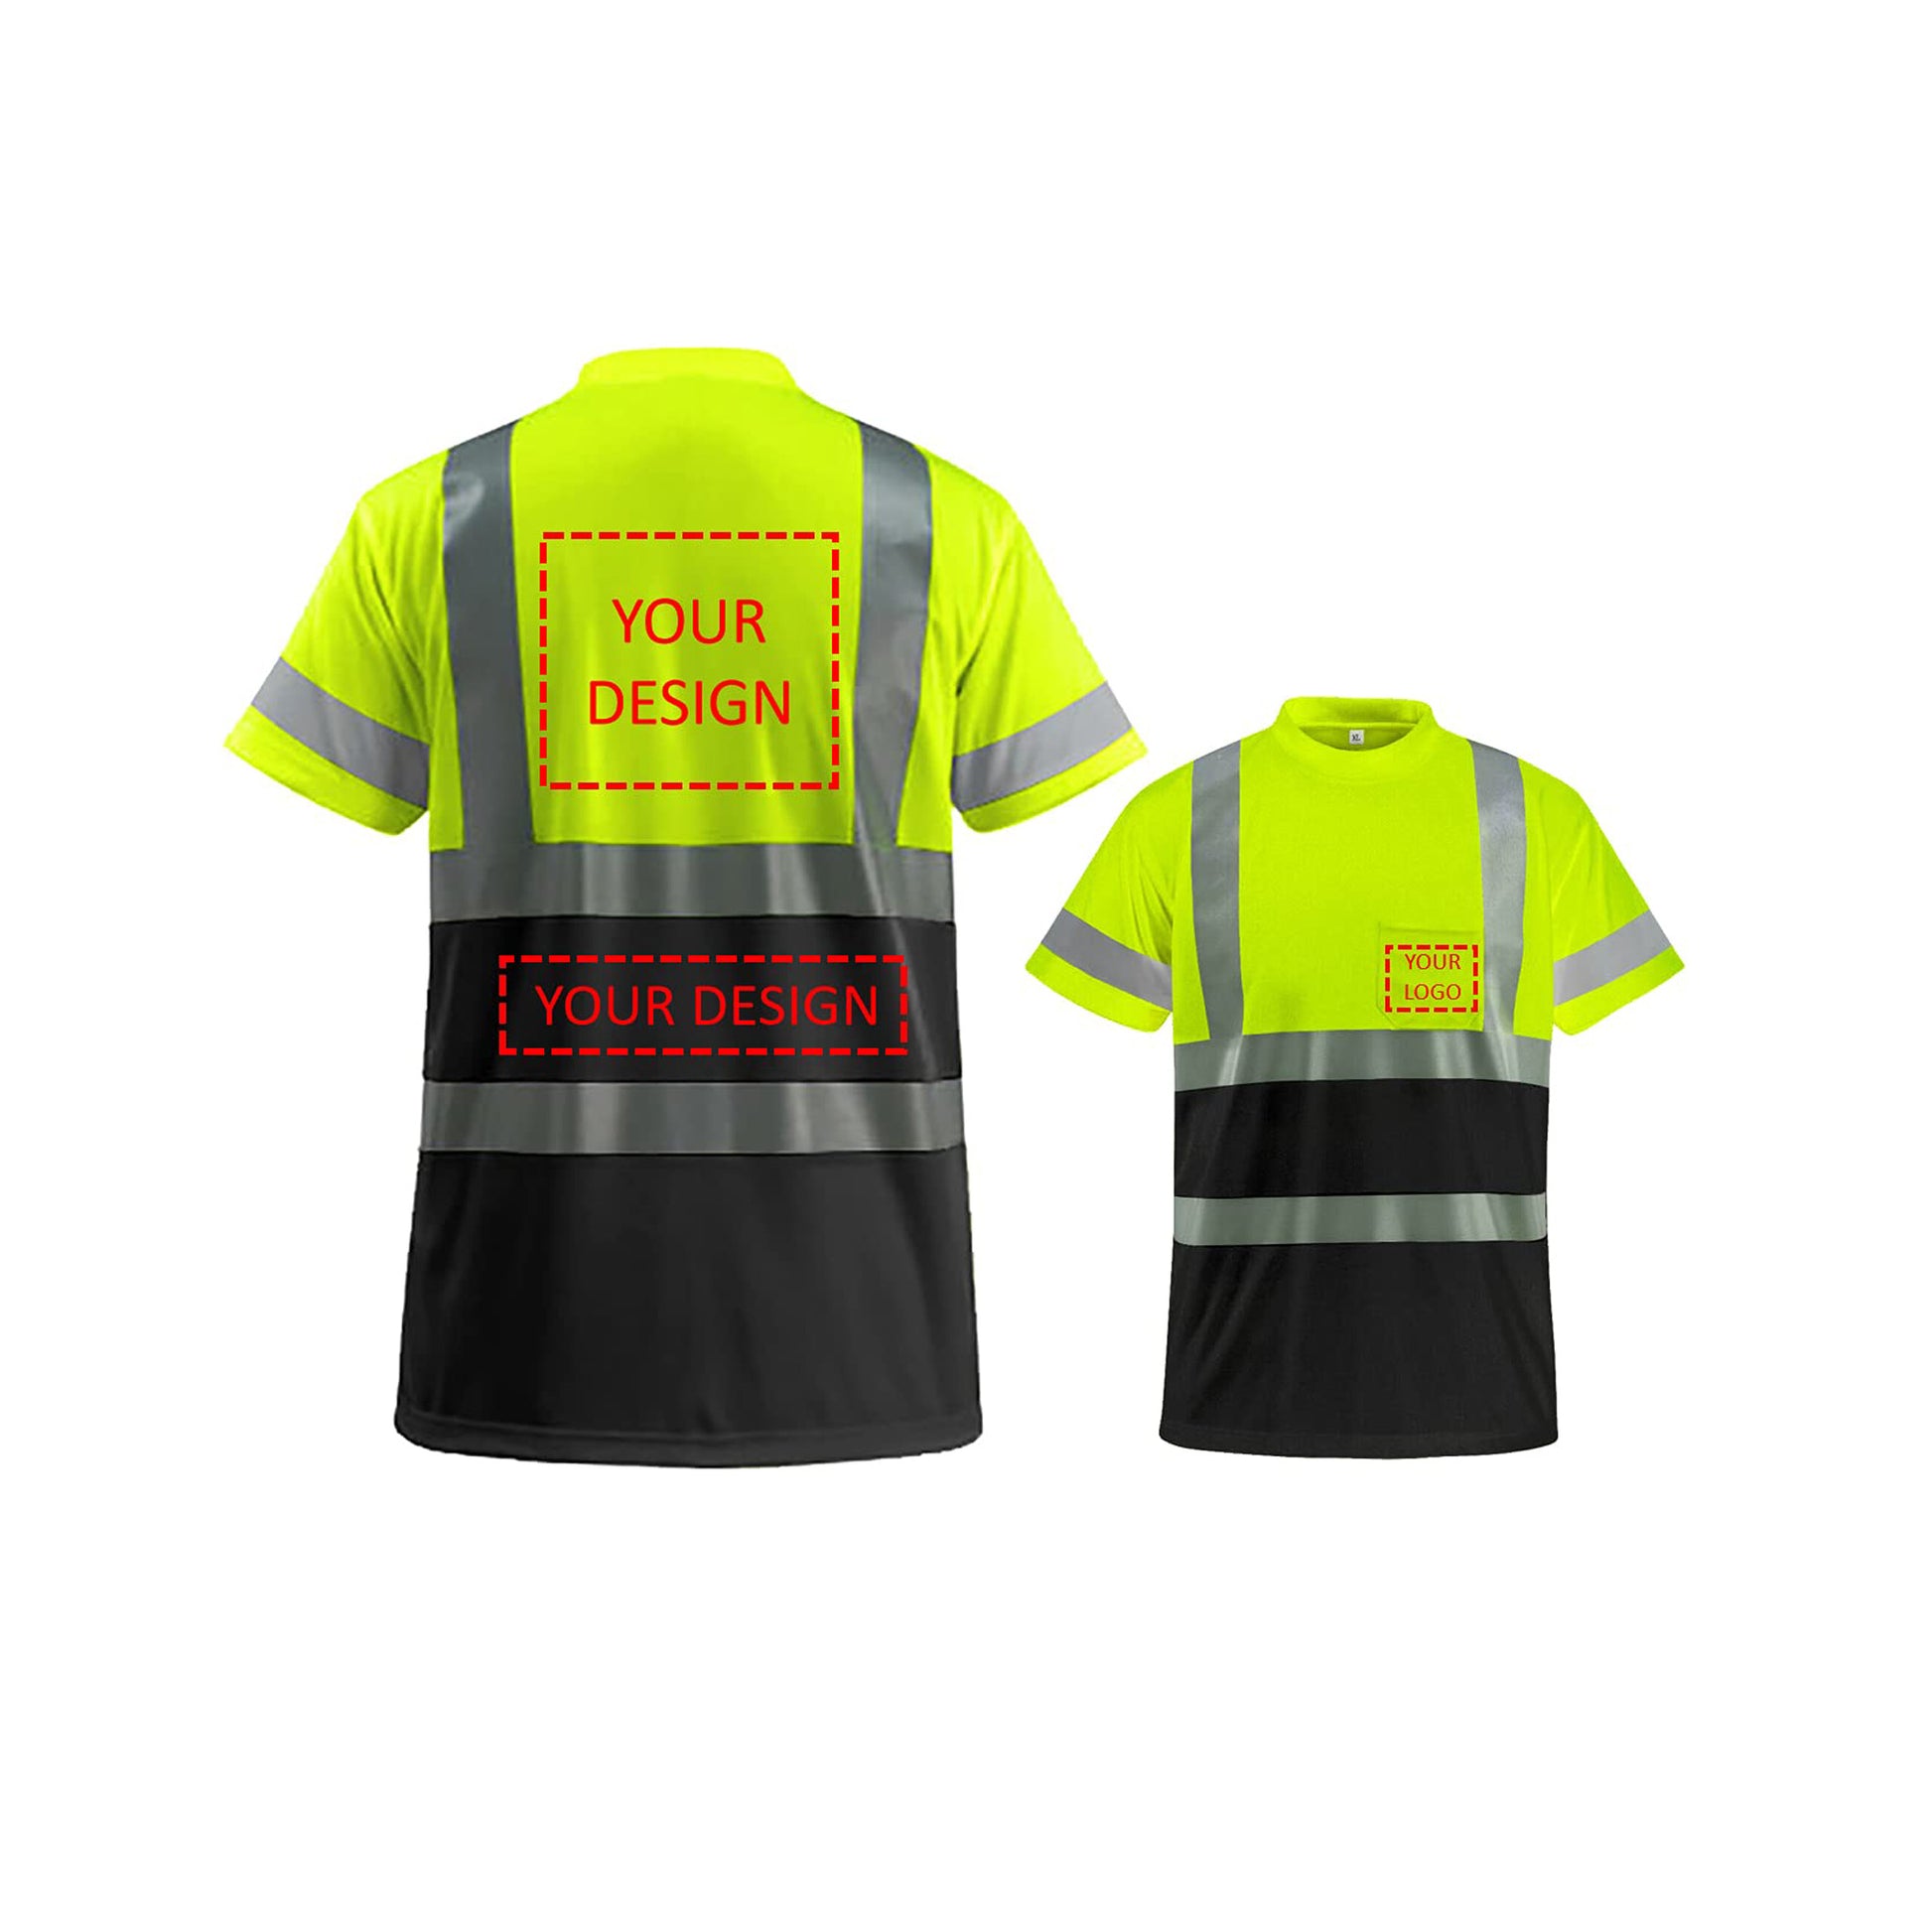  High Visibility Reflective Safety T-Shirts Custom Logo